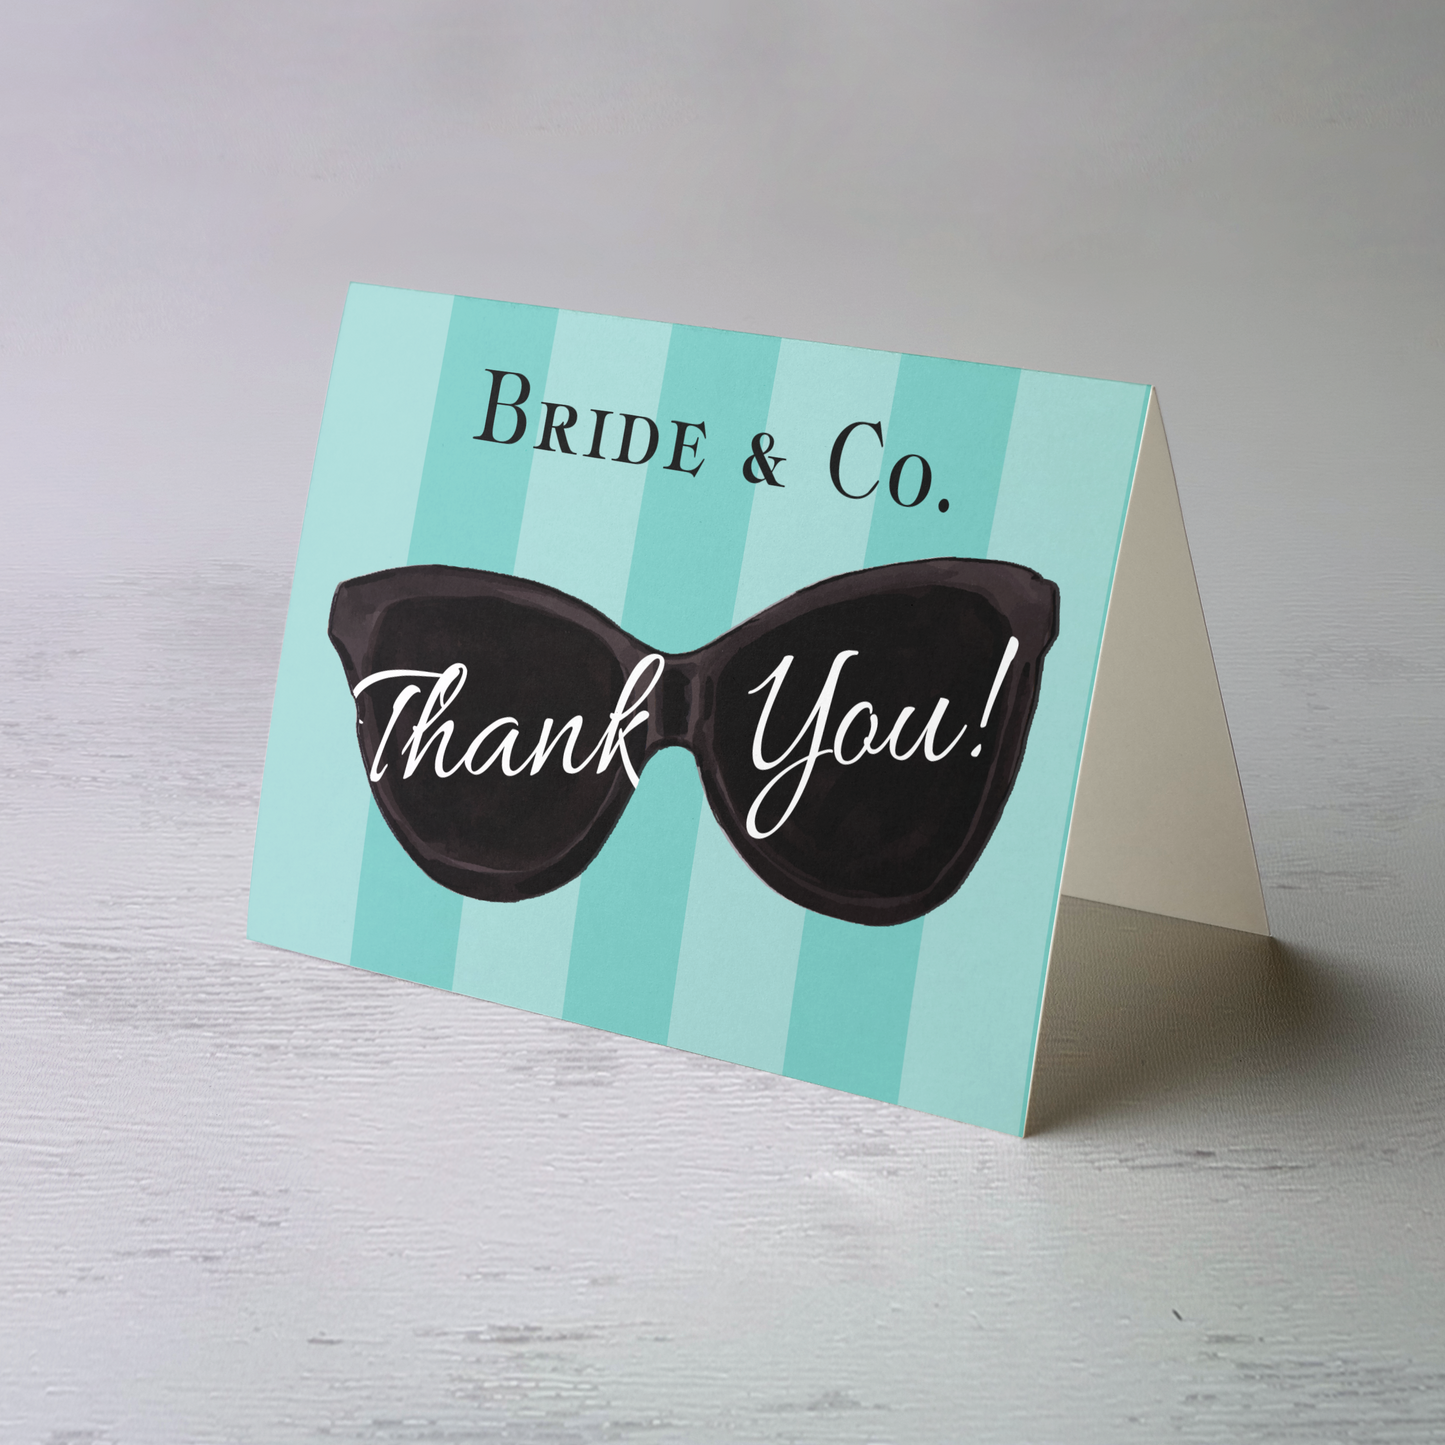 Bride & Co Bridal Shower Thank You Cards - Set of 10